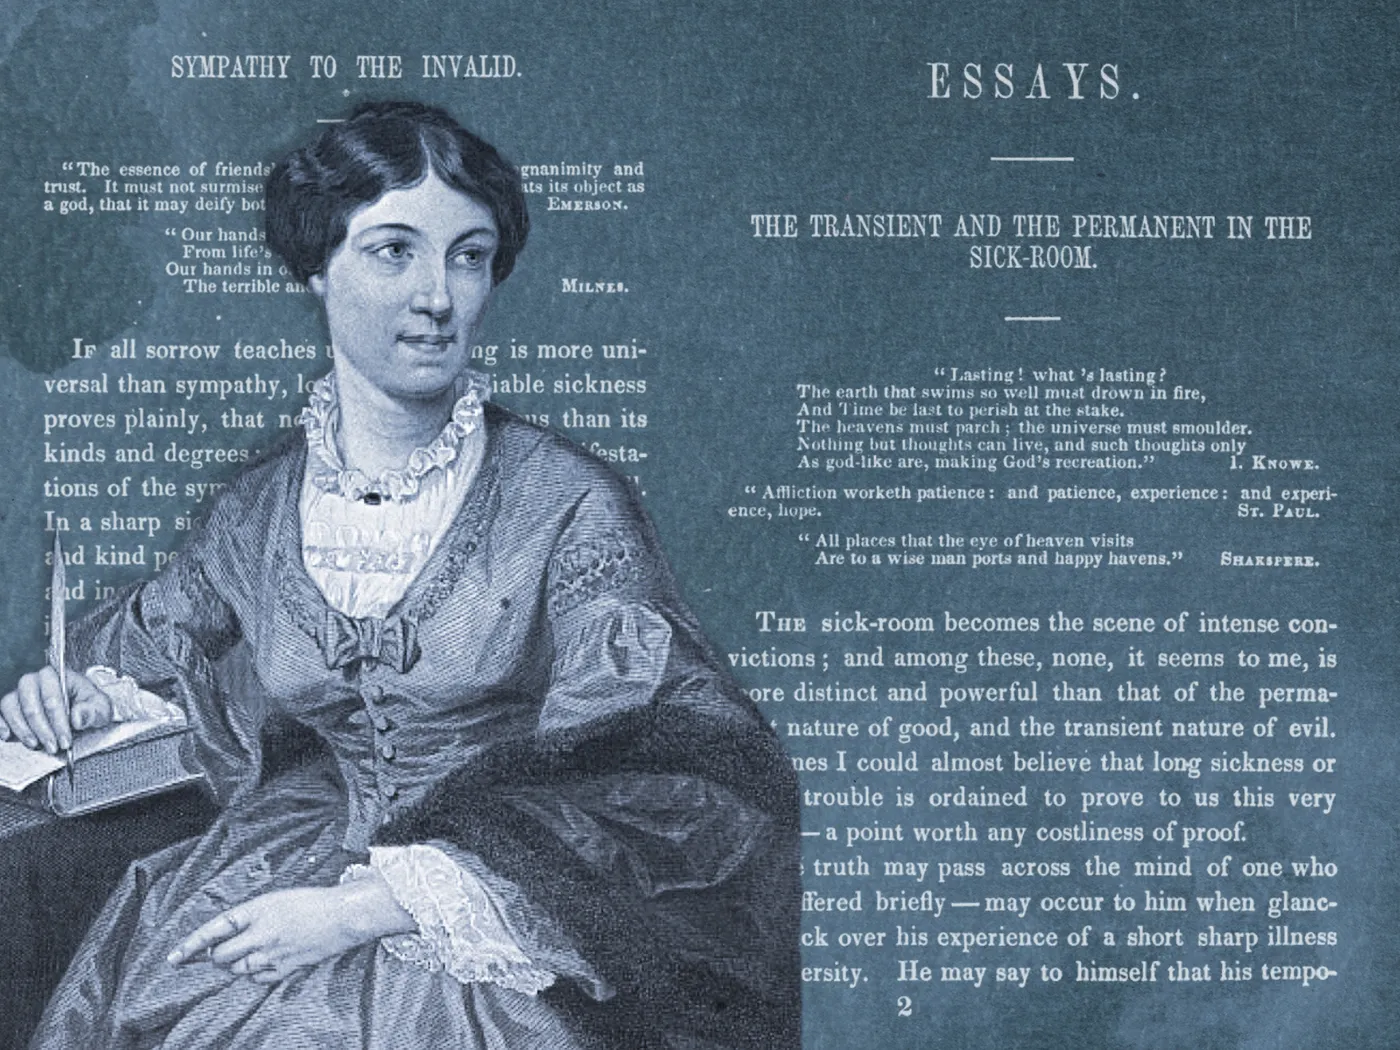 India Summer Focred Sex - Who Was Victorian Writer Harriet Martineau? | History| Smithsonian Magazine